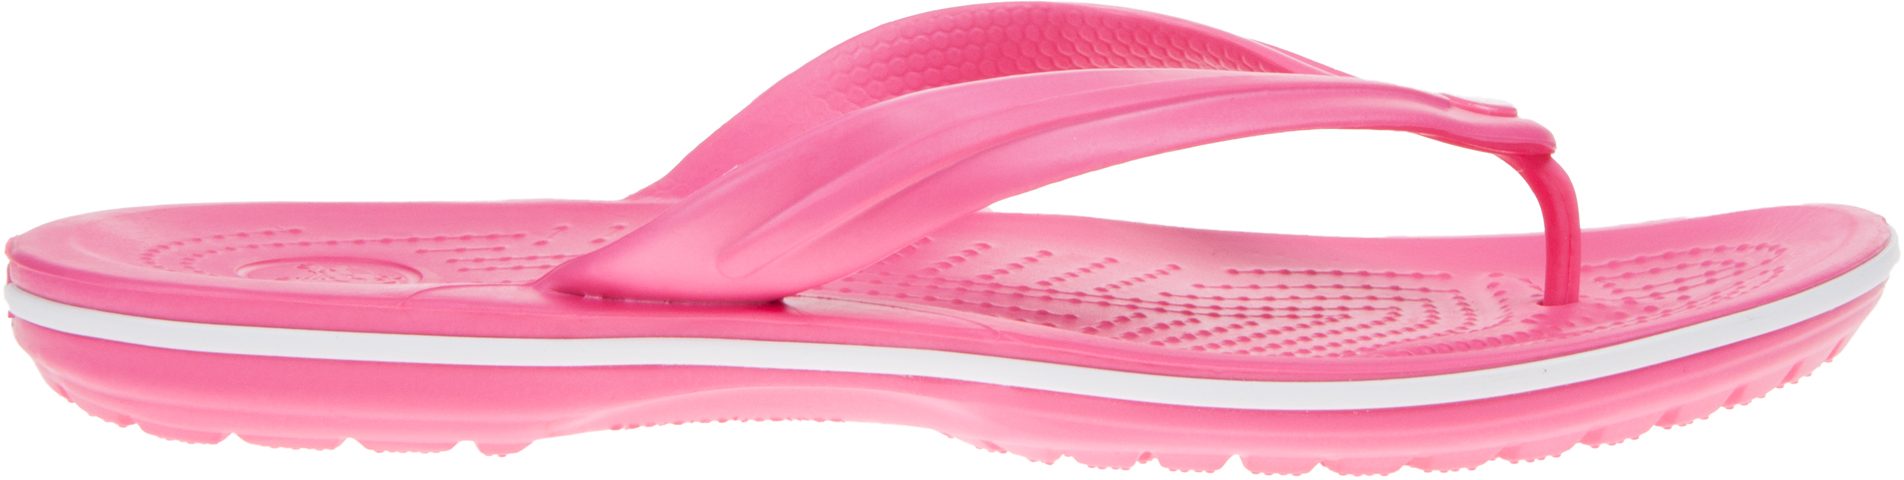 Crocs Crocband Flip Paradise Pink 11033-6NR - Toe Post Sandals ...